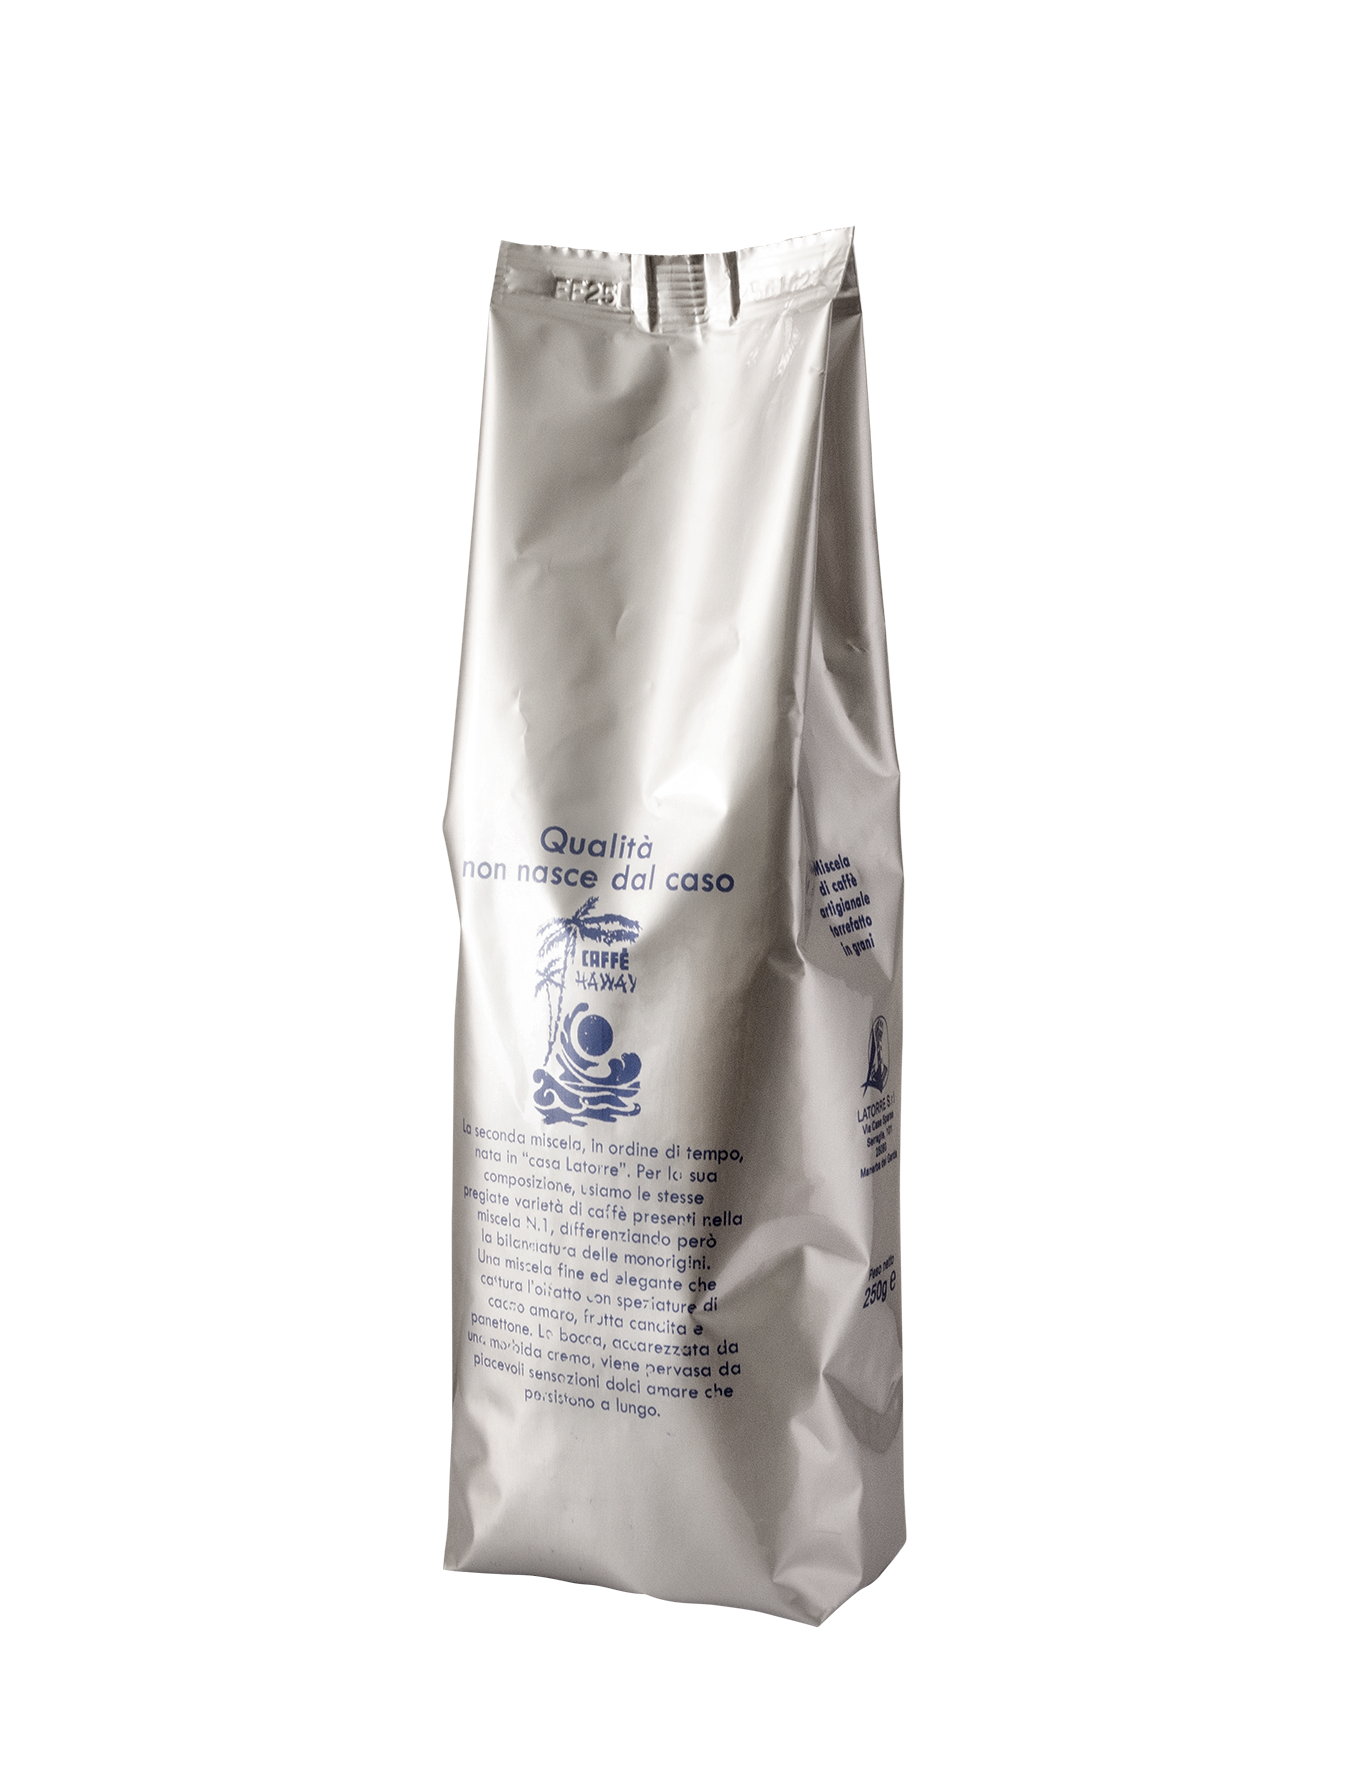 sacchetto da 250 gr in grani caffè haway